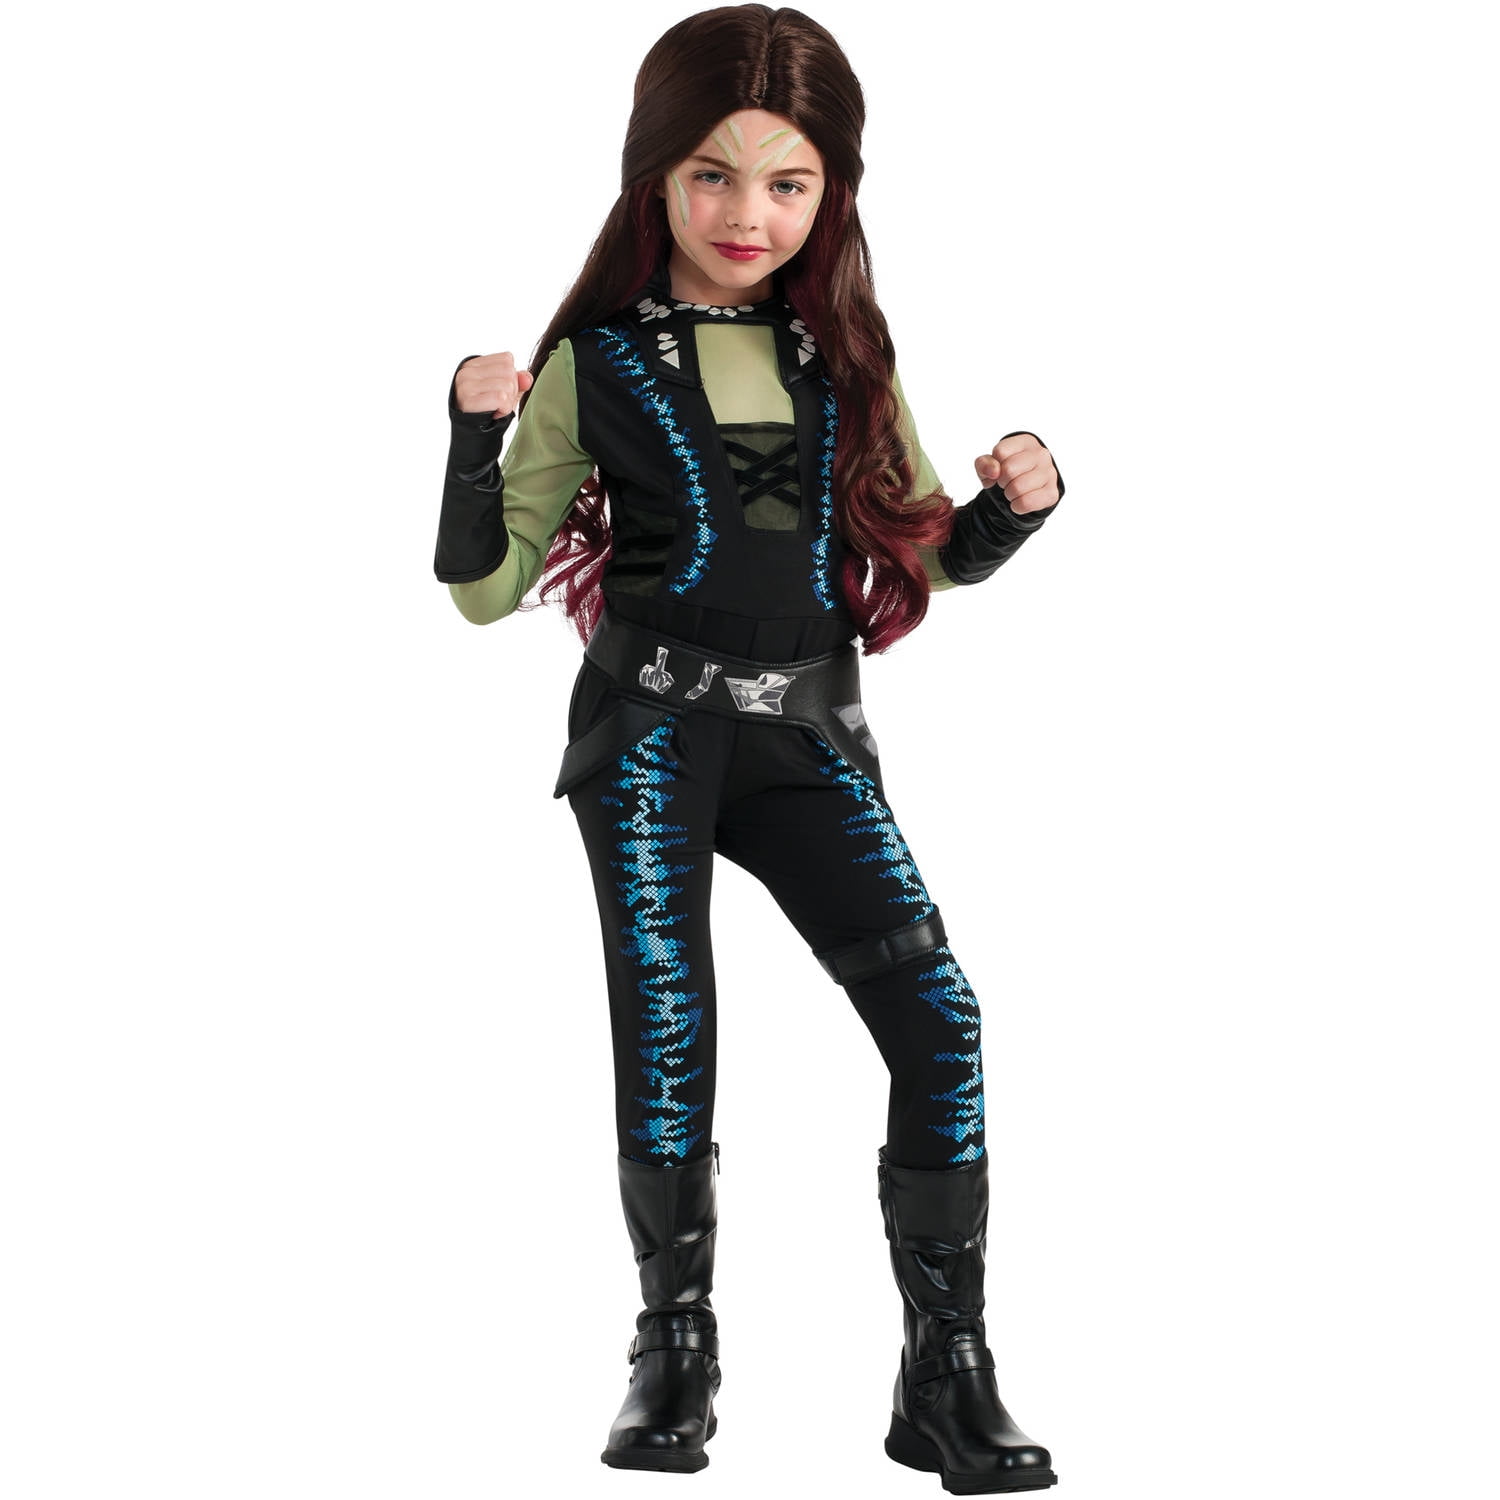 Guardians of the Galaxy Deluxe Gamora Child Halloween Costume - Walmart.com...